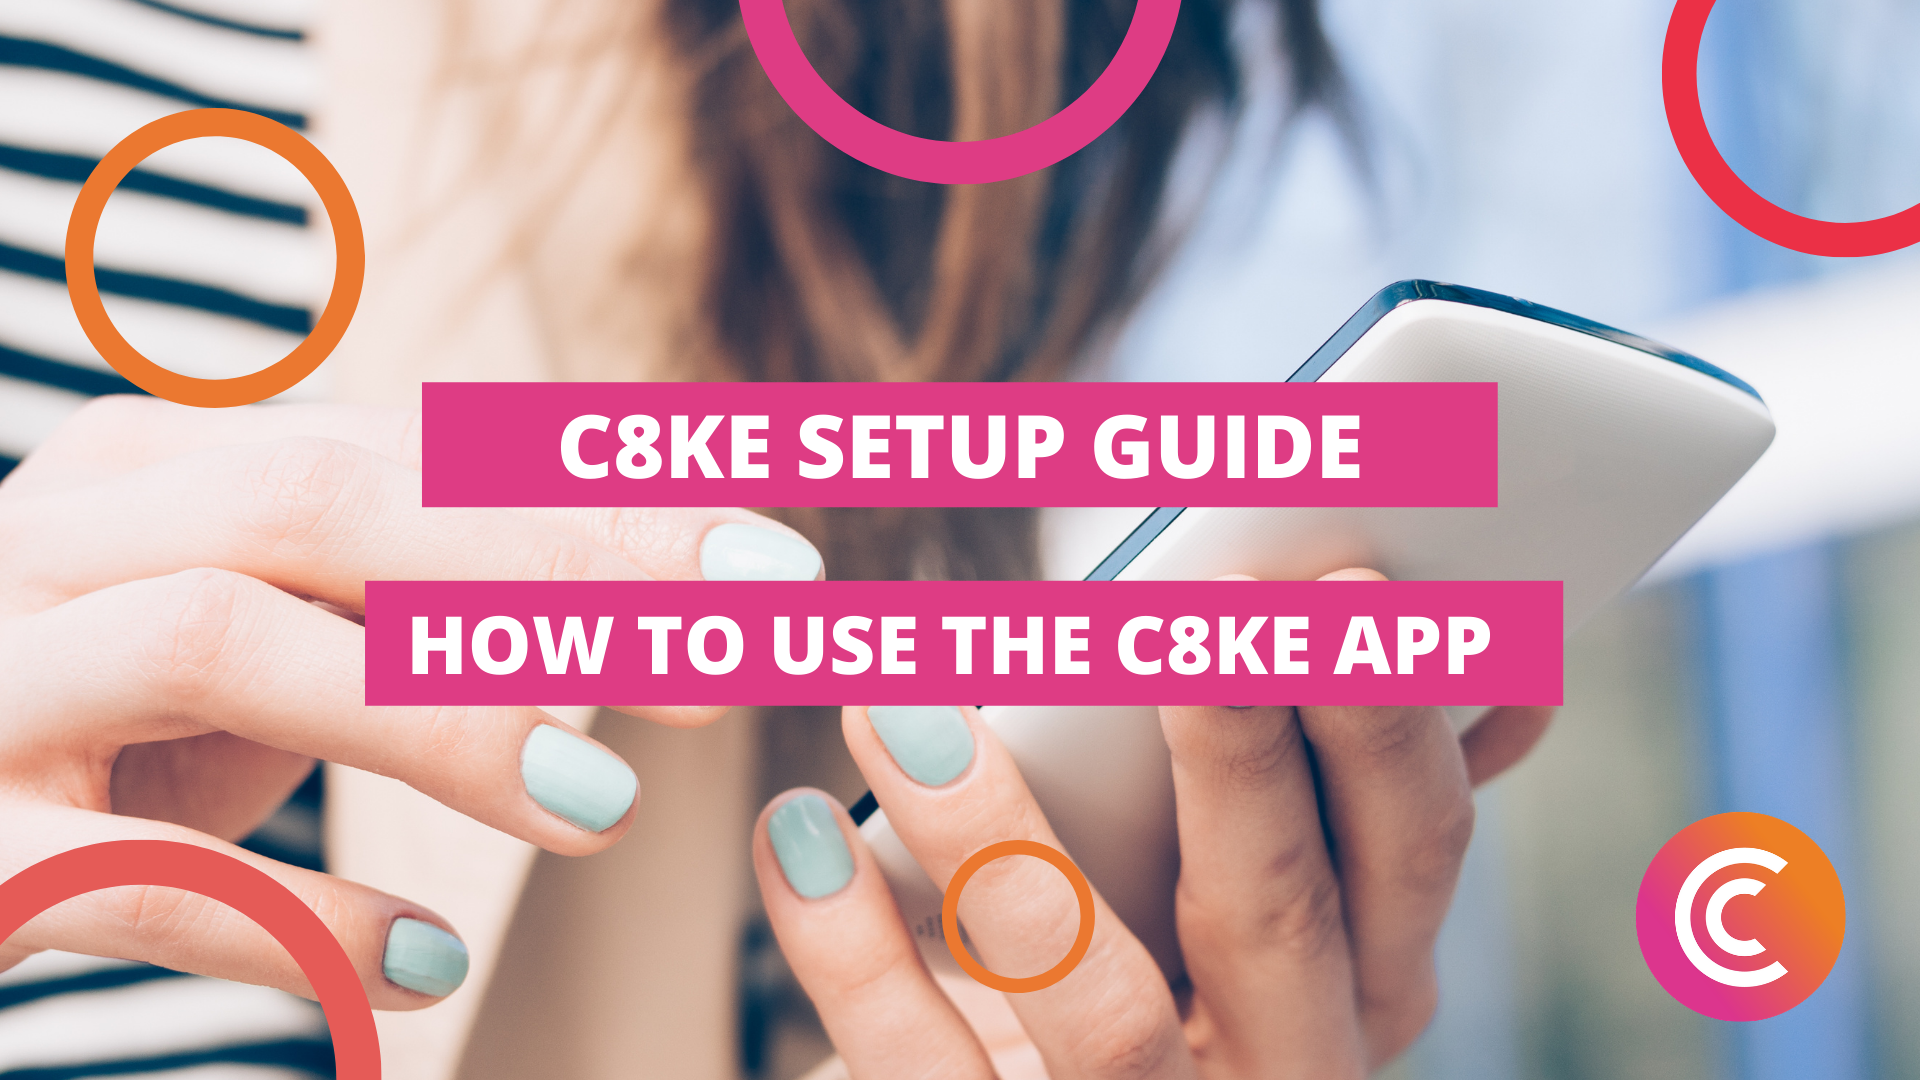 C8ke Guide: How to use the C8ke App